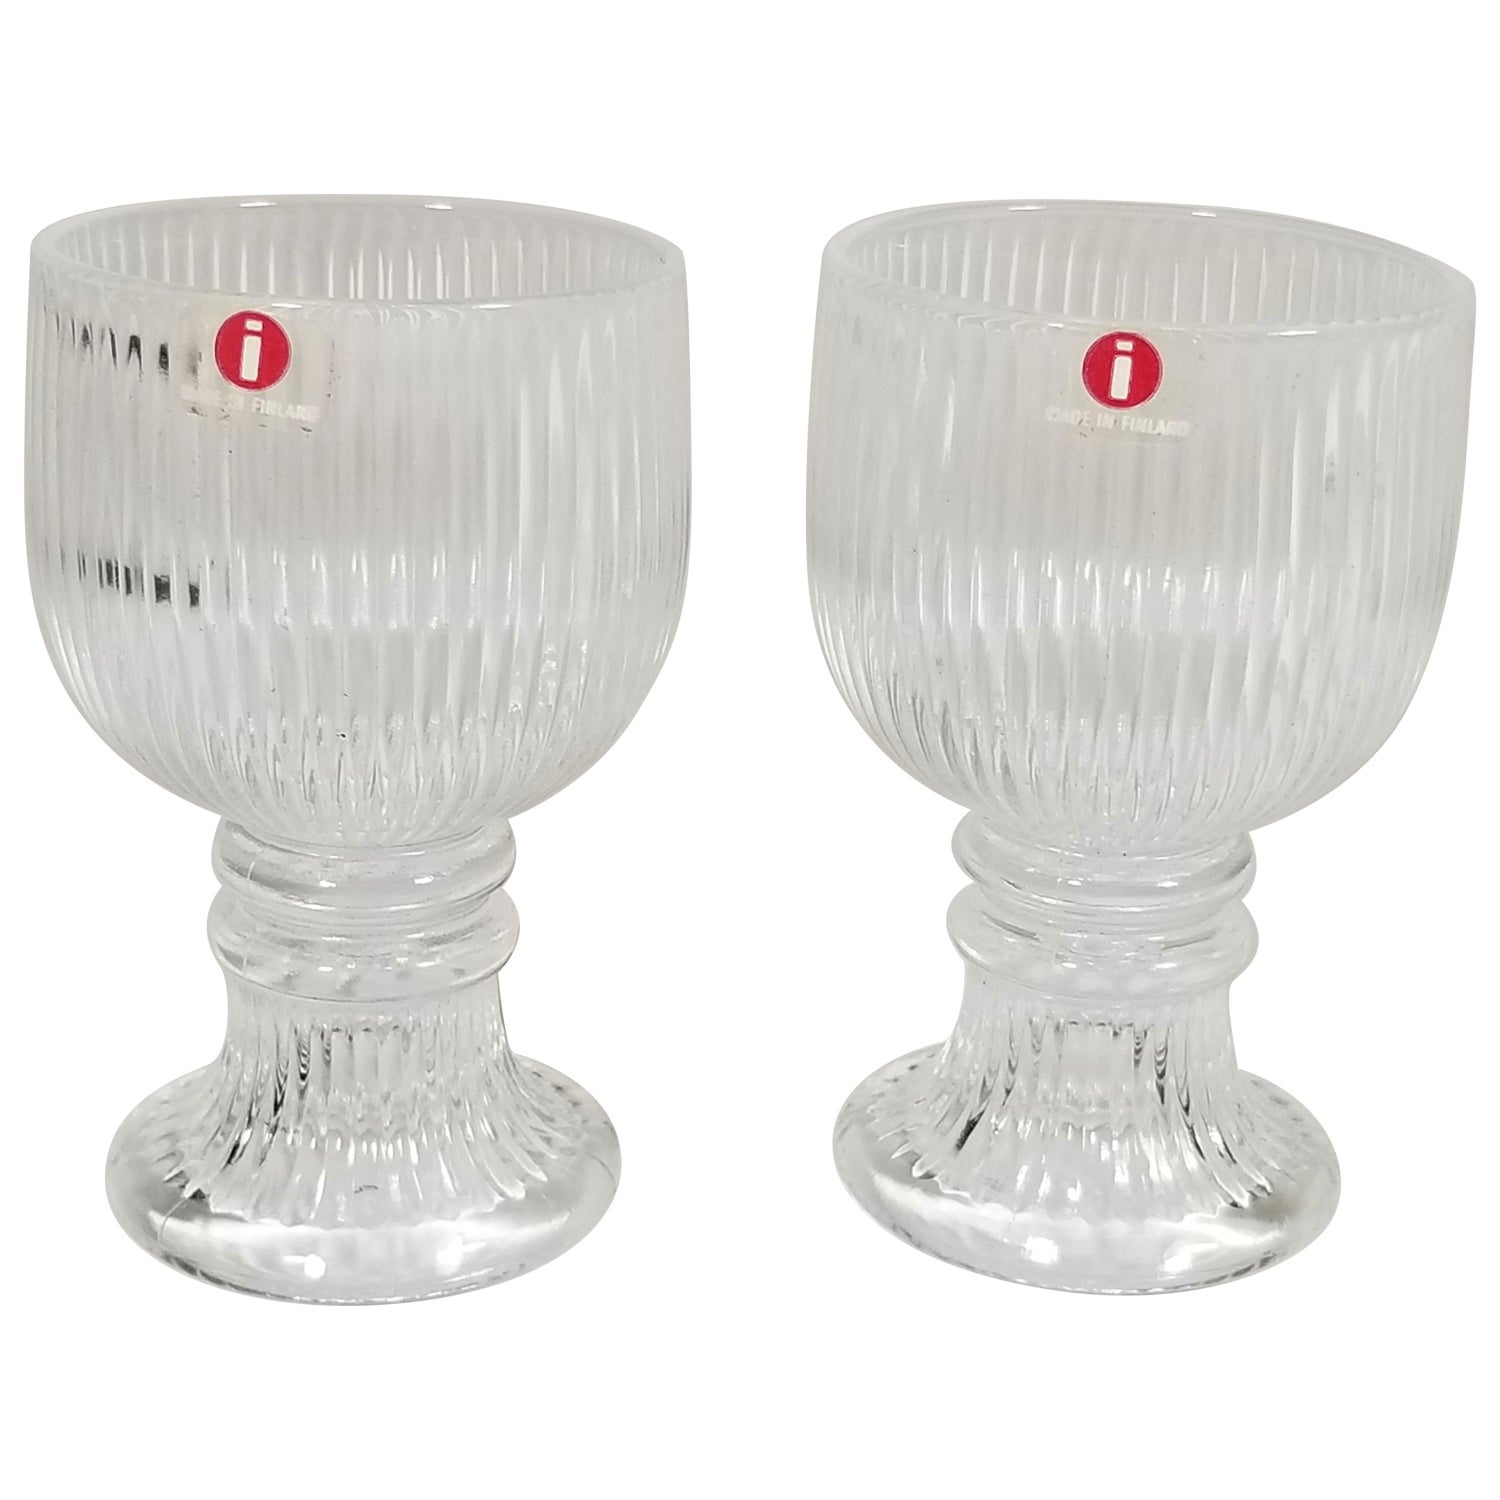 Iittala Glassware - 19 For Sale on 1stDibs